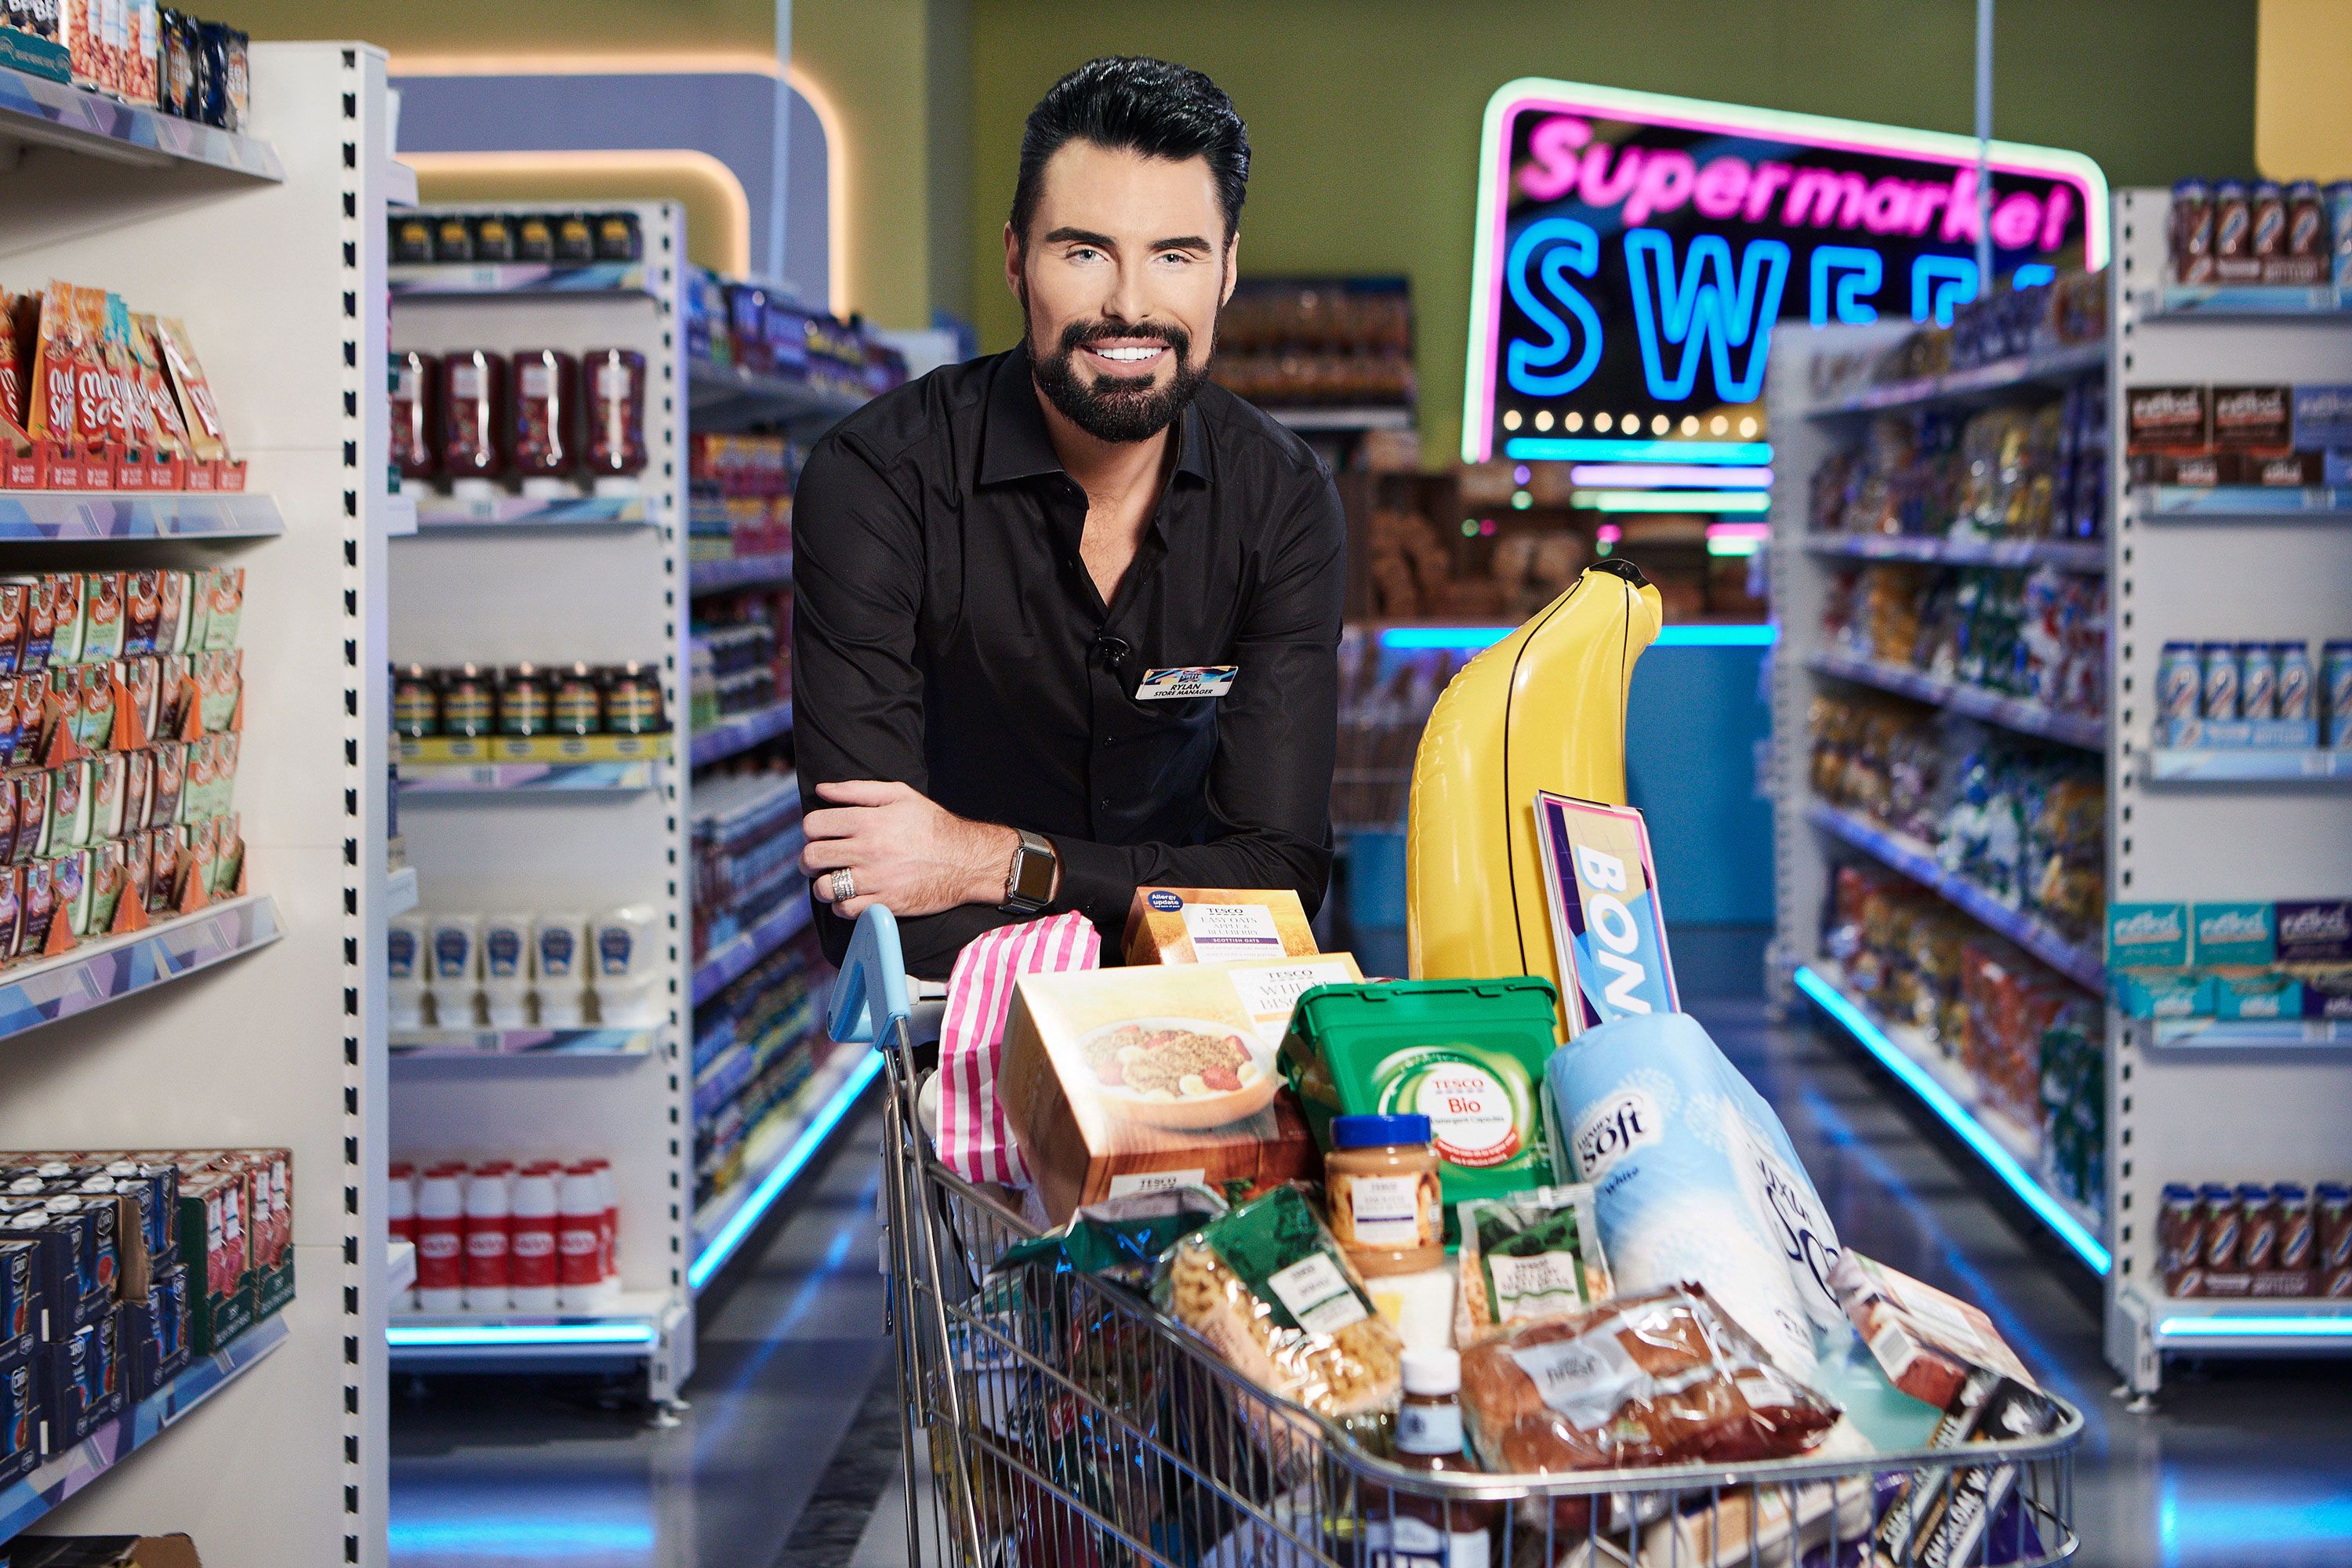 supermarket sweep penalty